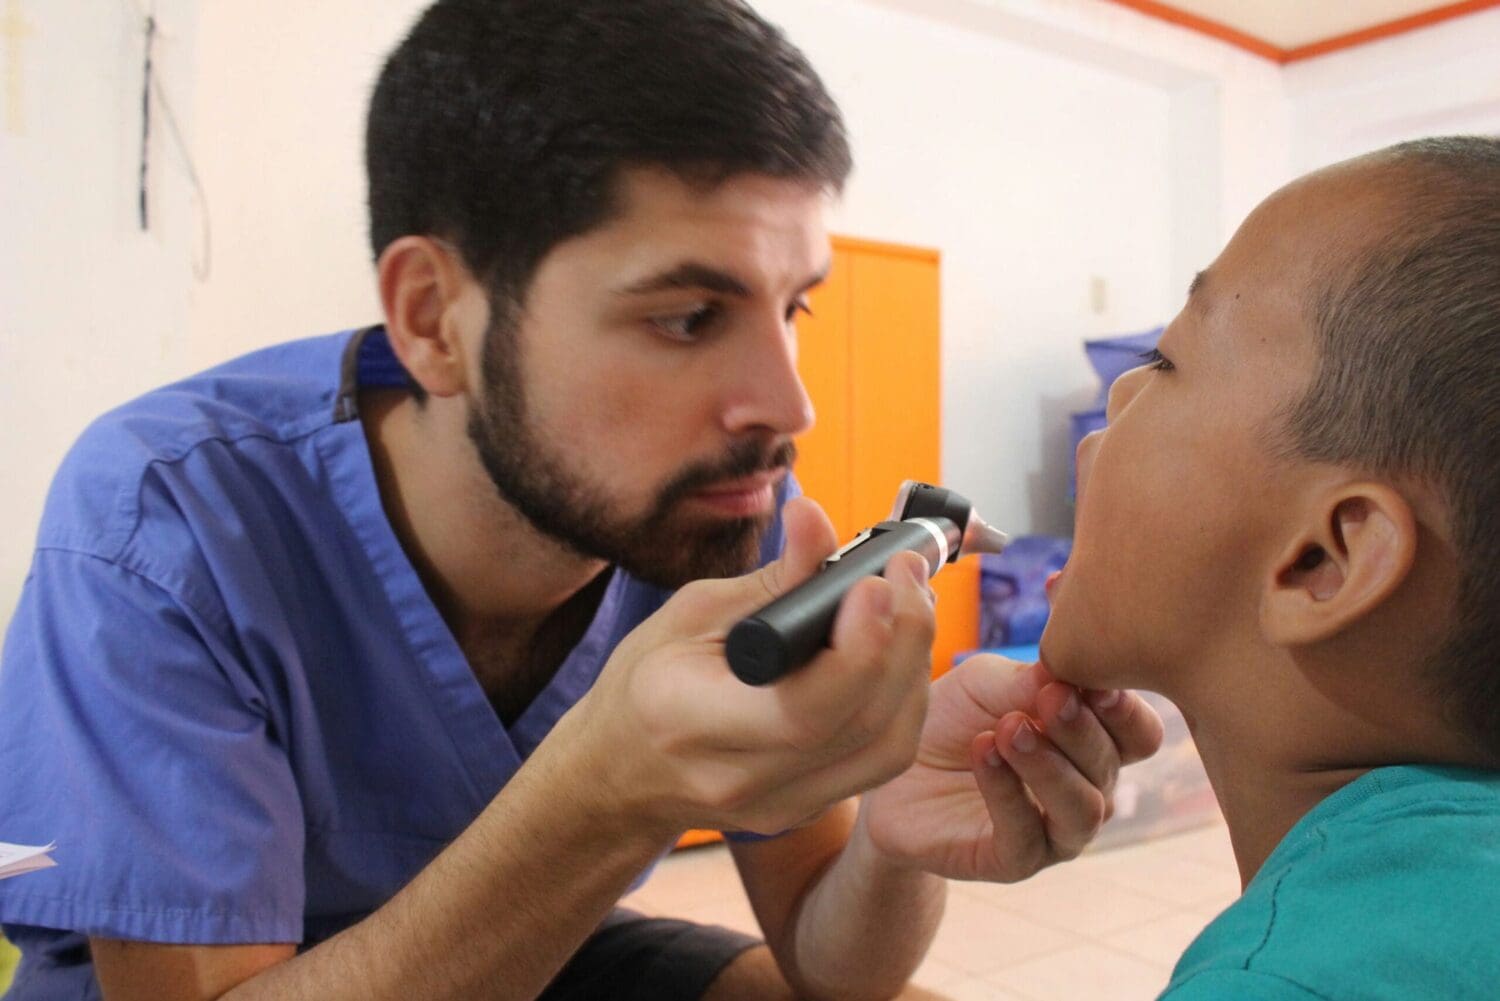 Medical Volunteer doing a checkup